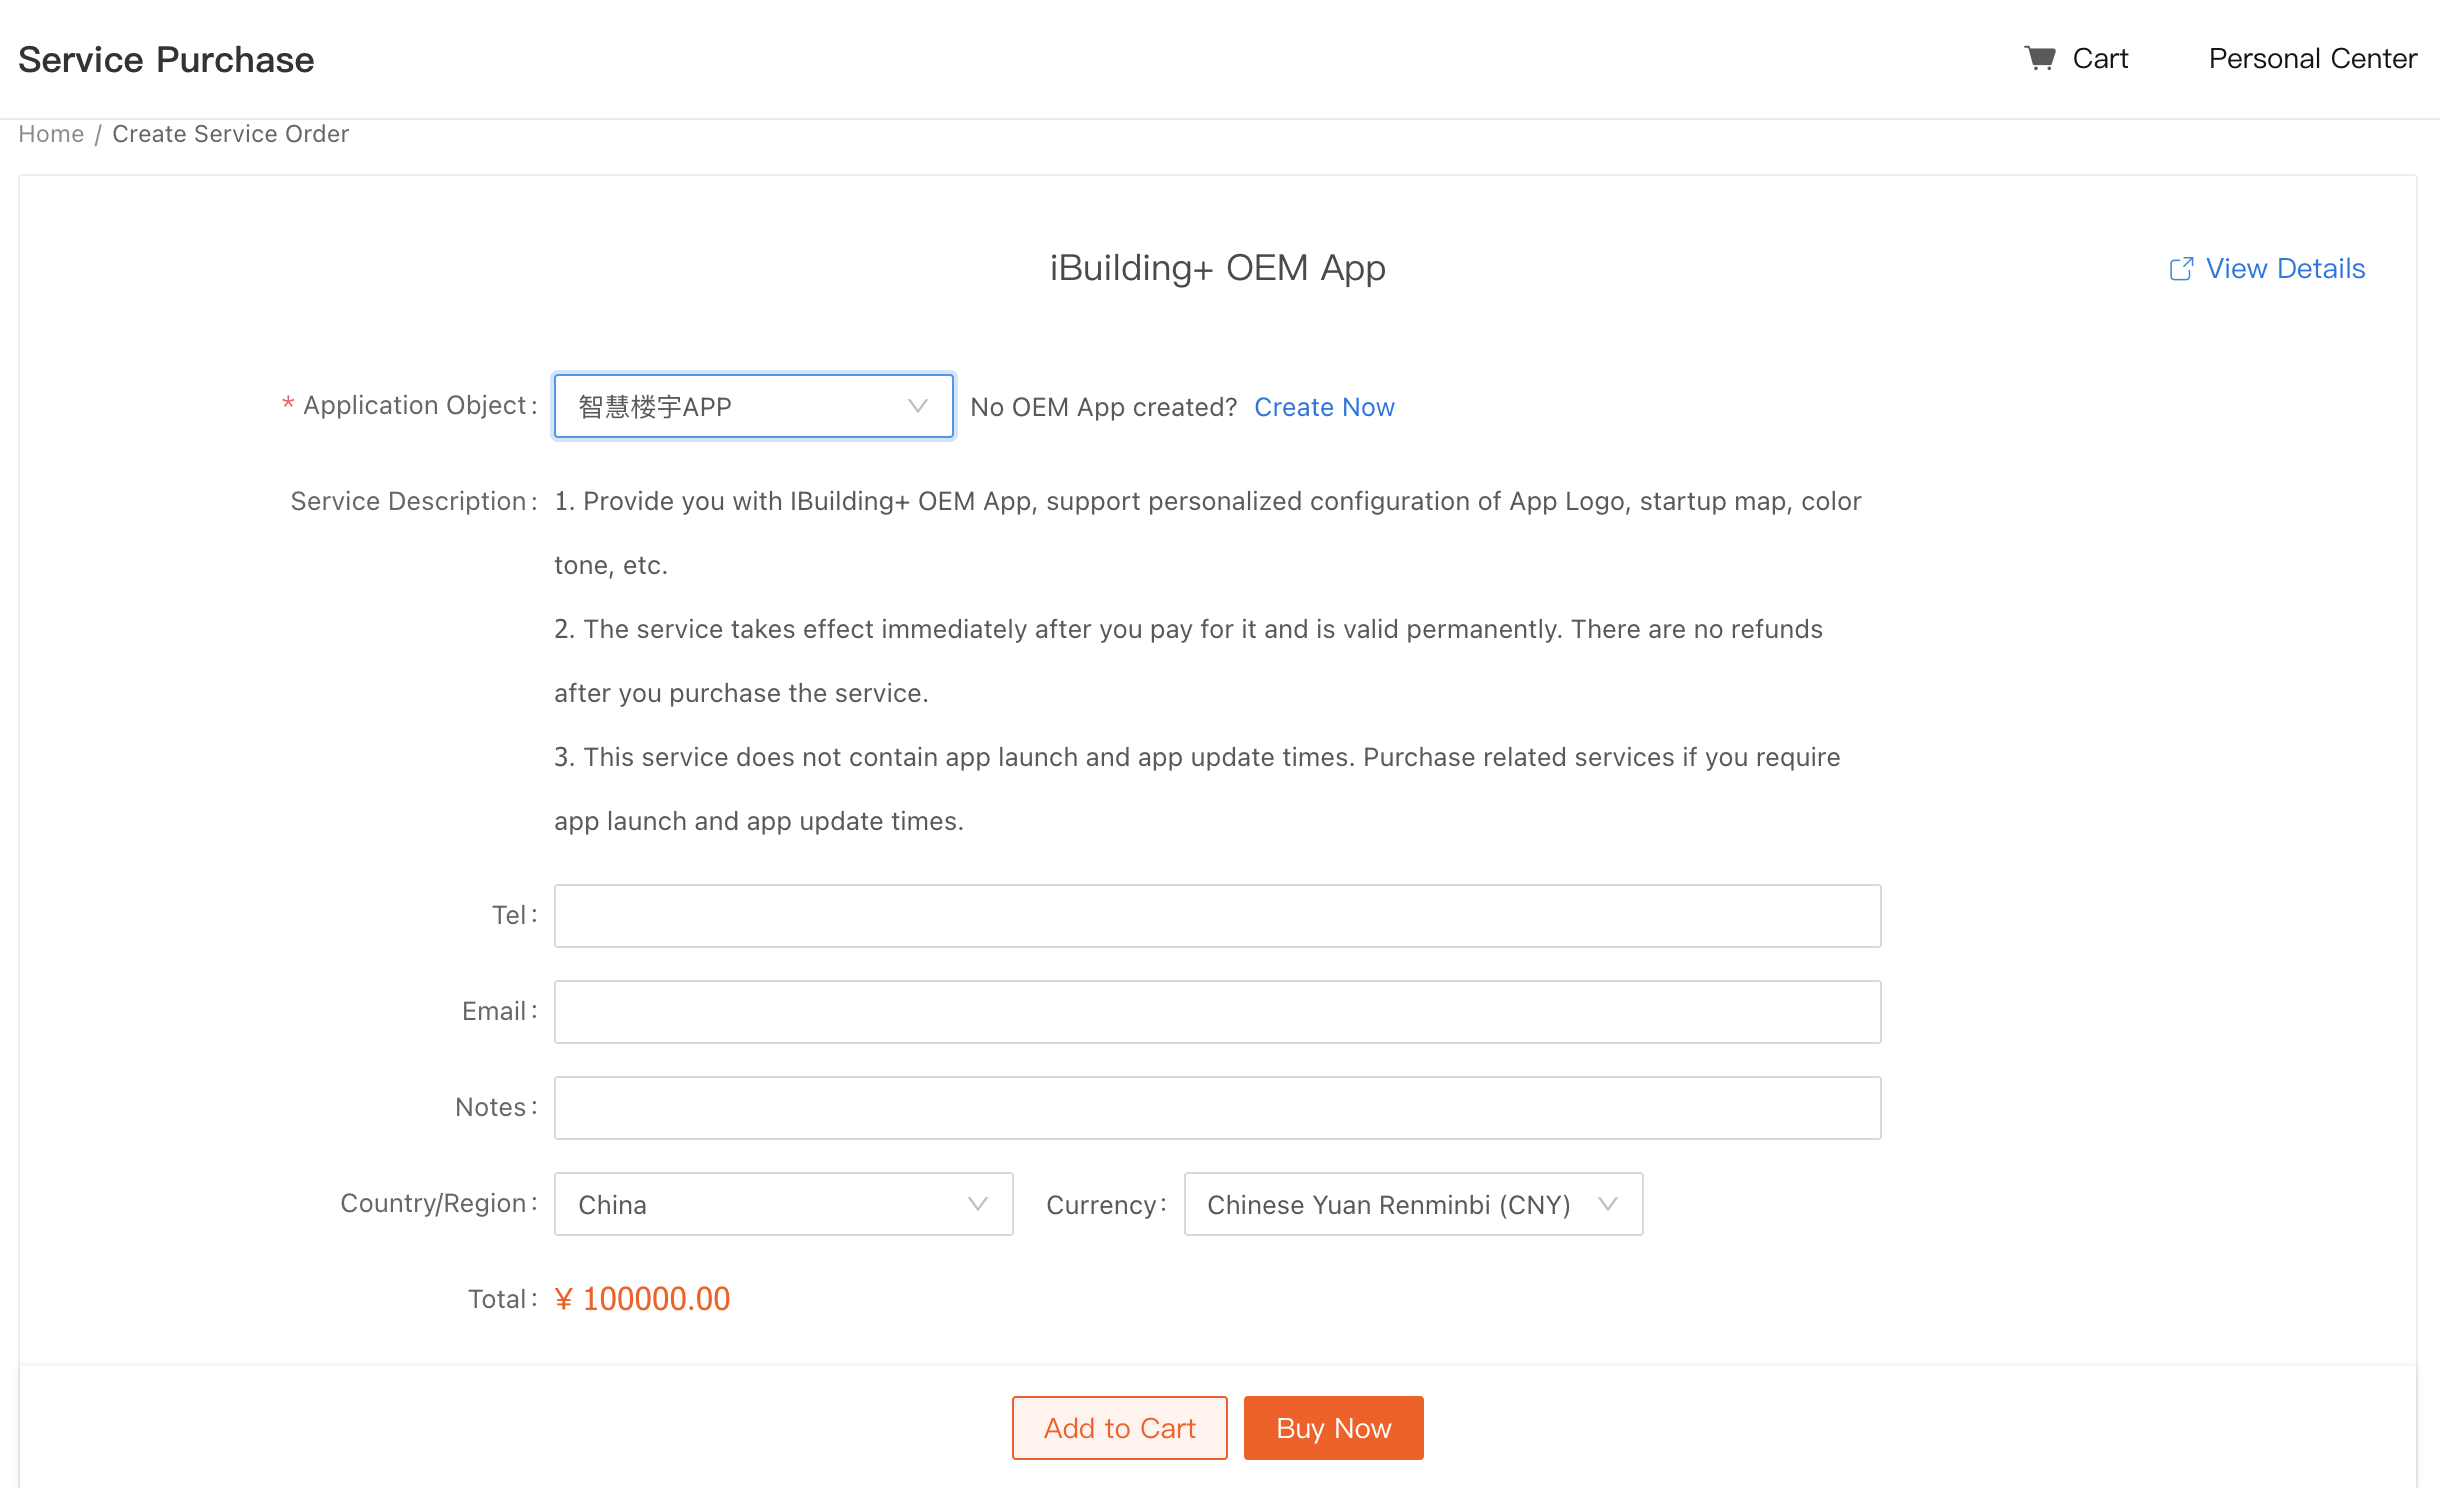 Create an OEM App for iBuilding+